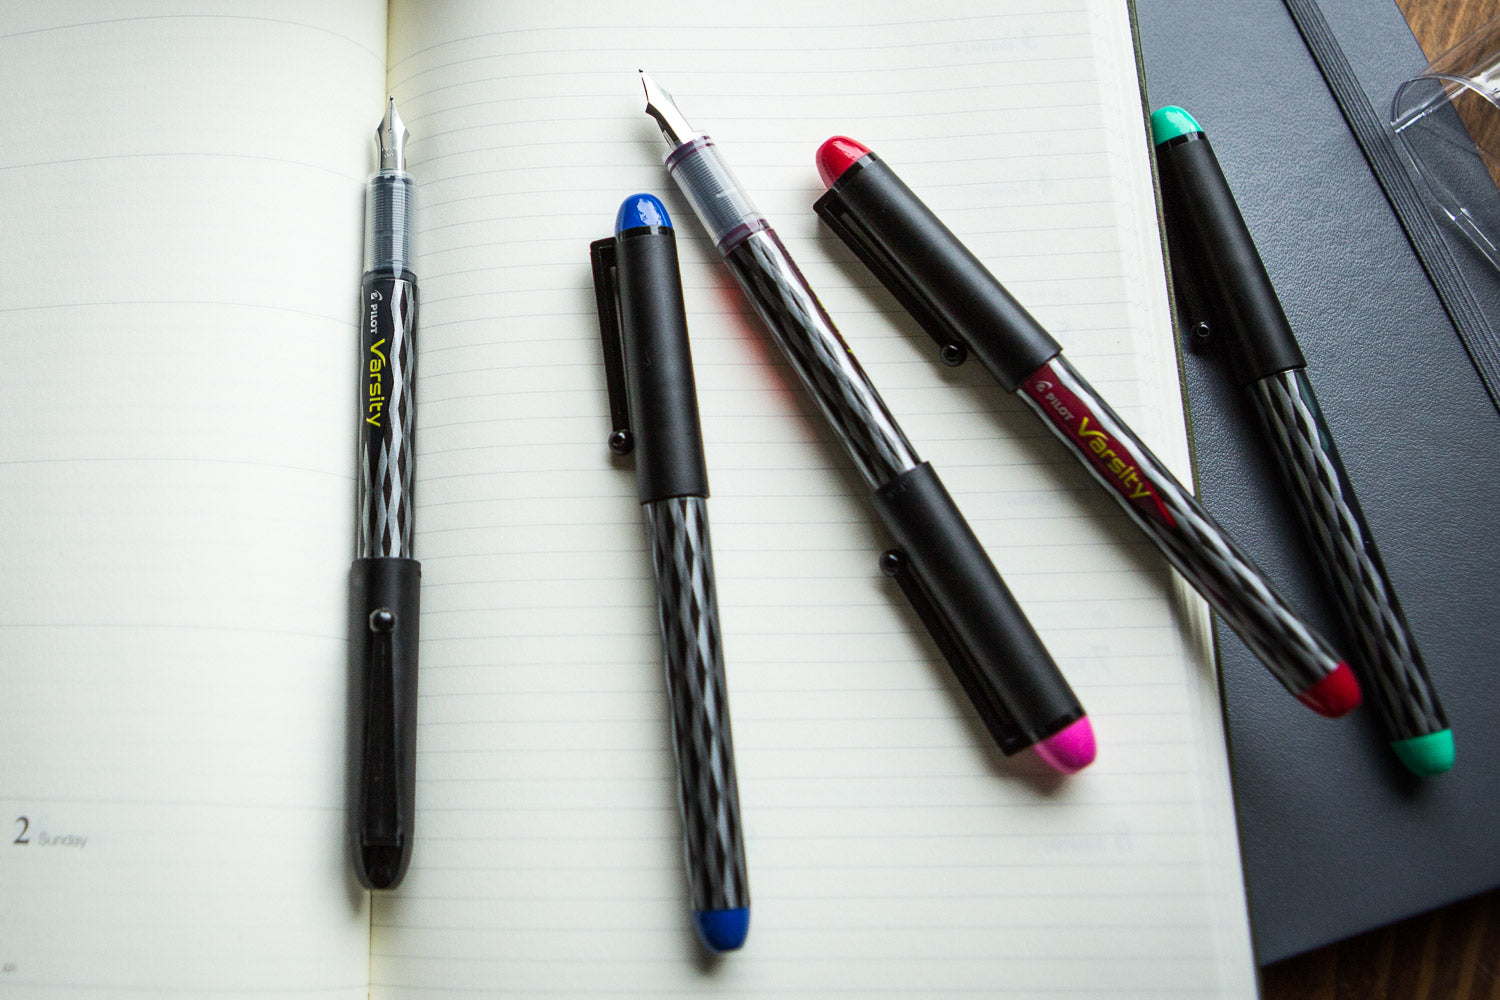 Pilot Varsity Disposable Fountain Pens - Medium Pen Point - Black, Blue,  Purple - Black Barrel - 3 / Pack - Bluebird Office Supplies